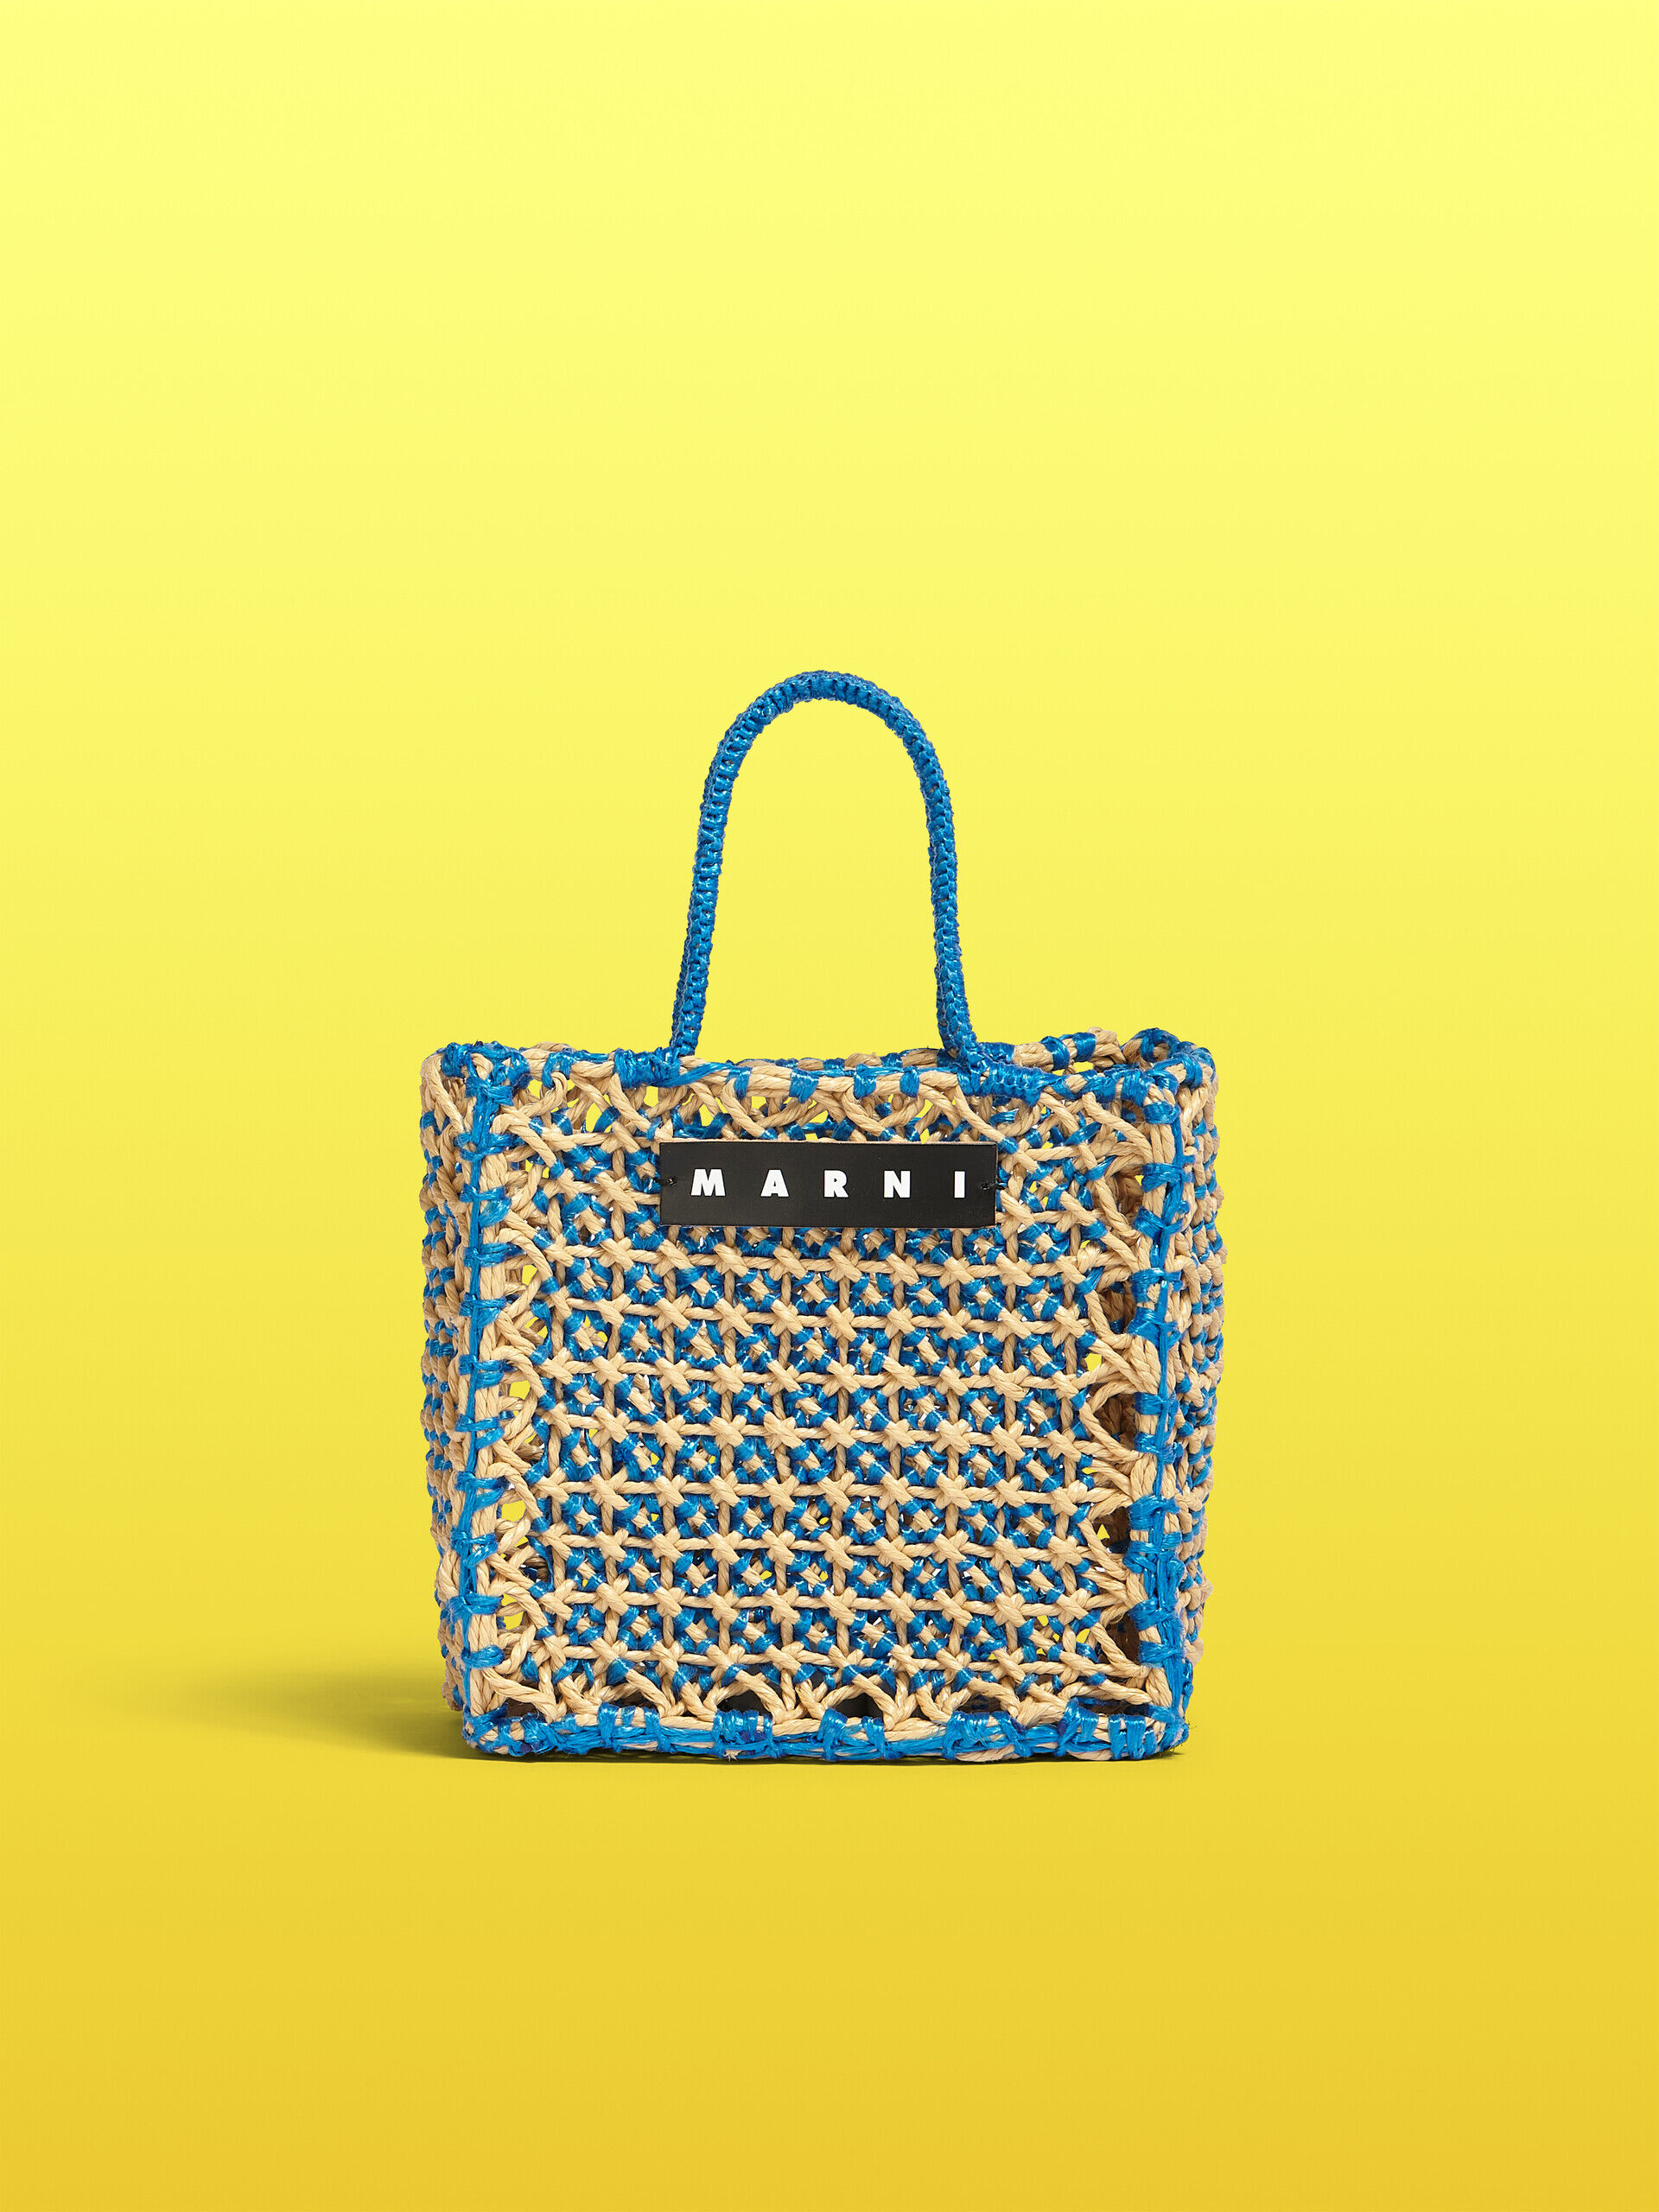 MARNI MARKET JURTA small bag in pale blue and beige crochet | Marni